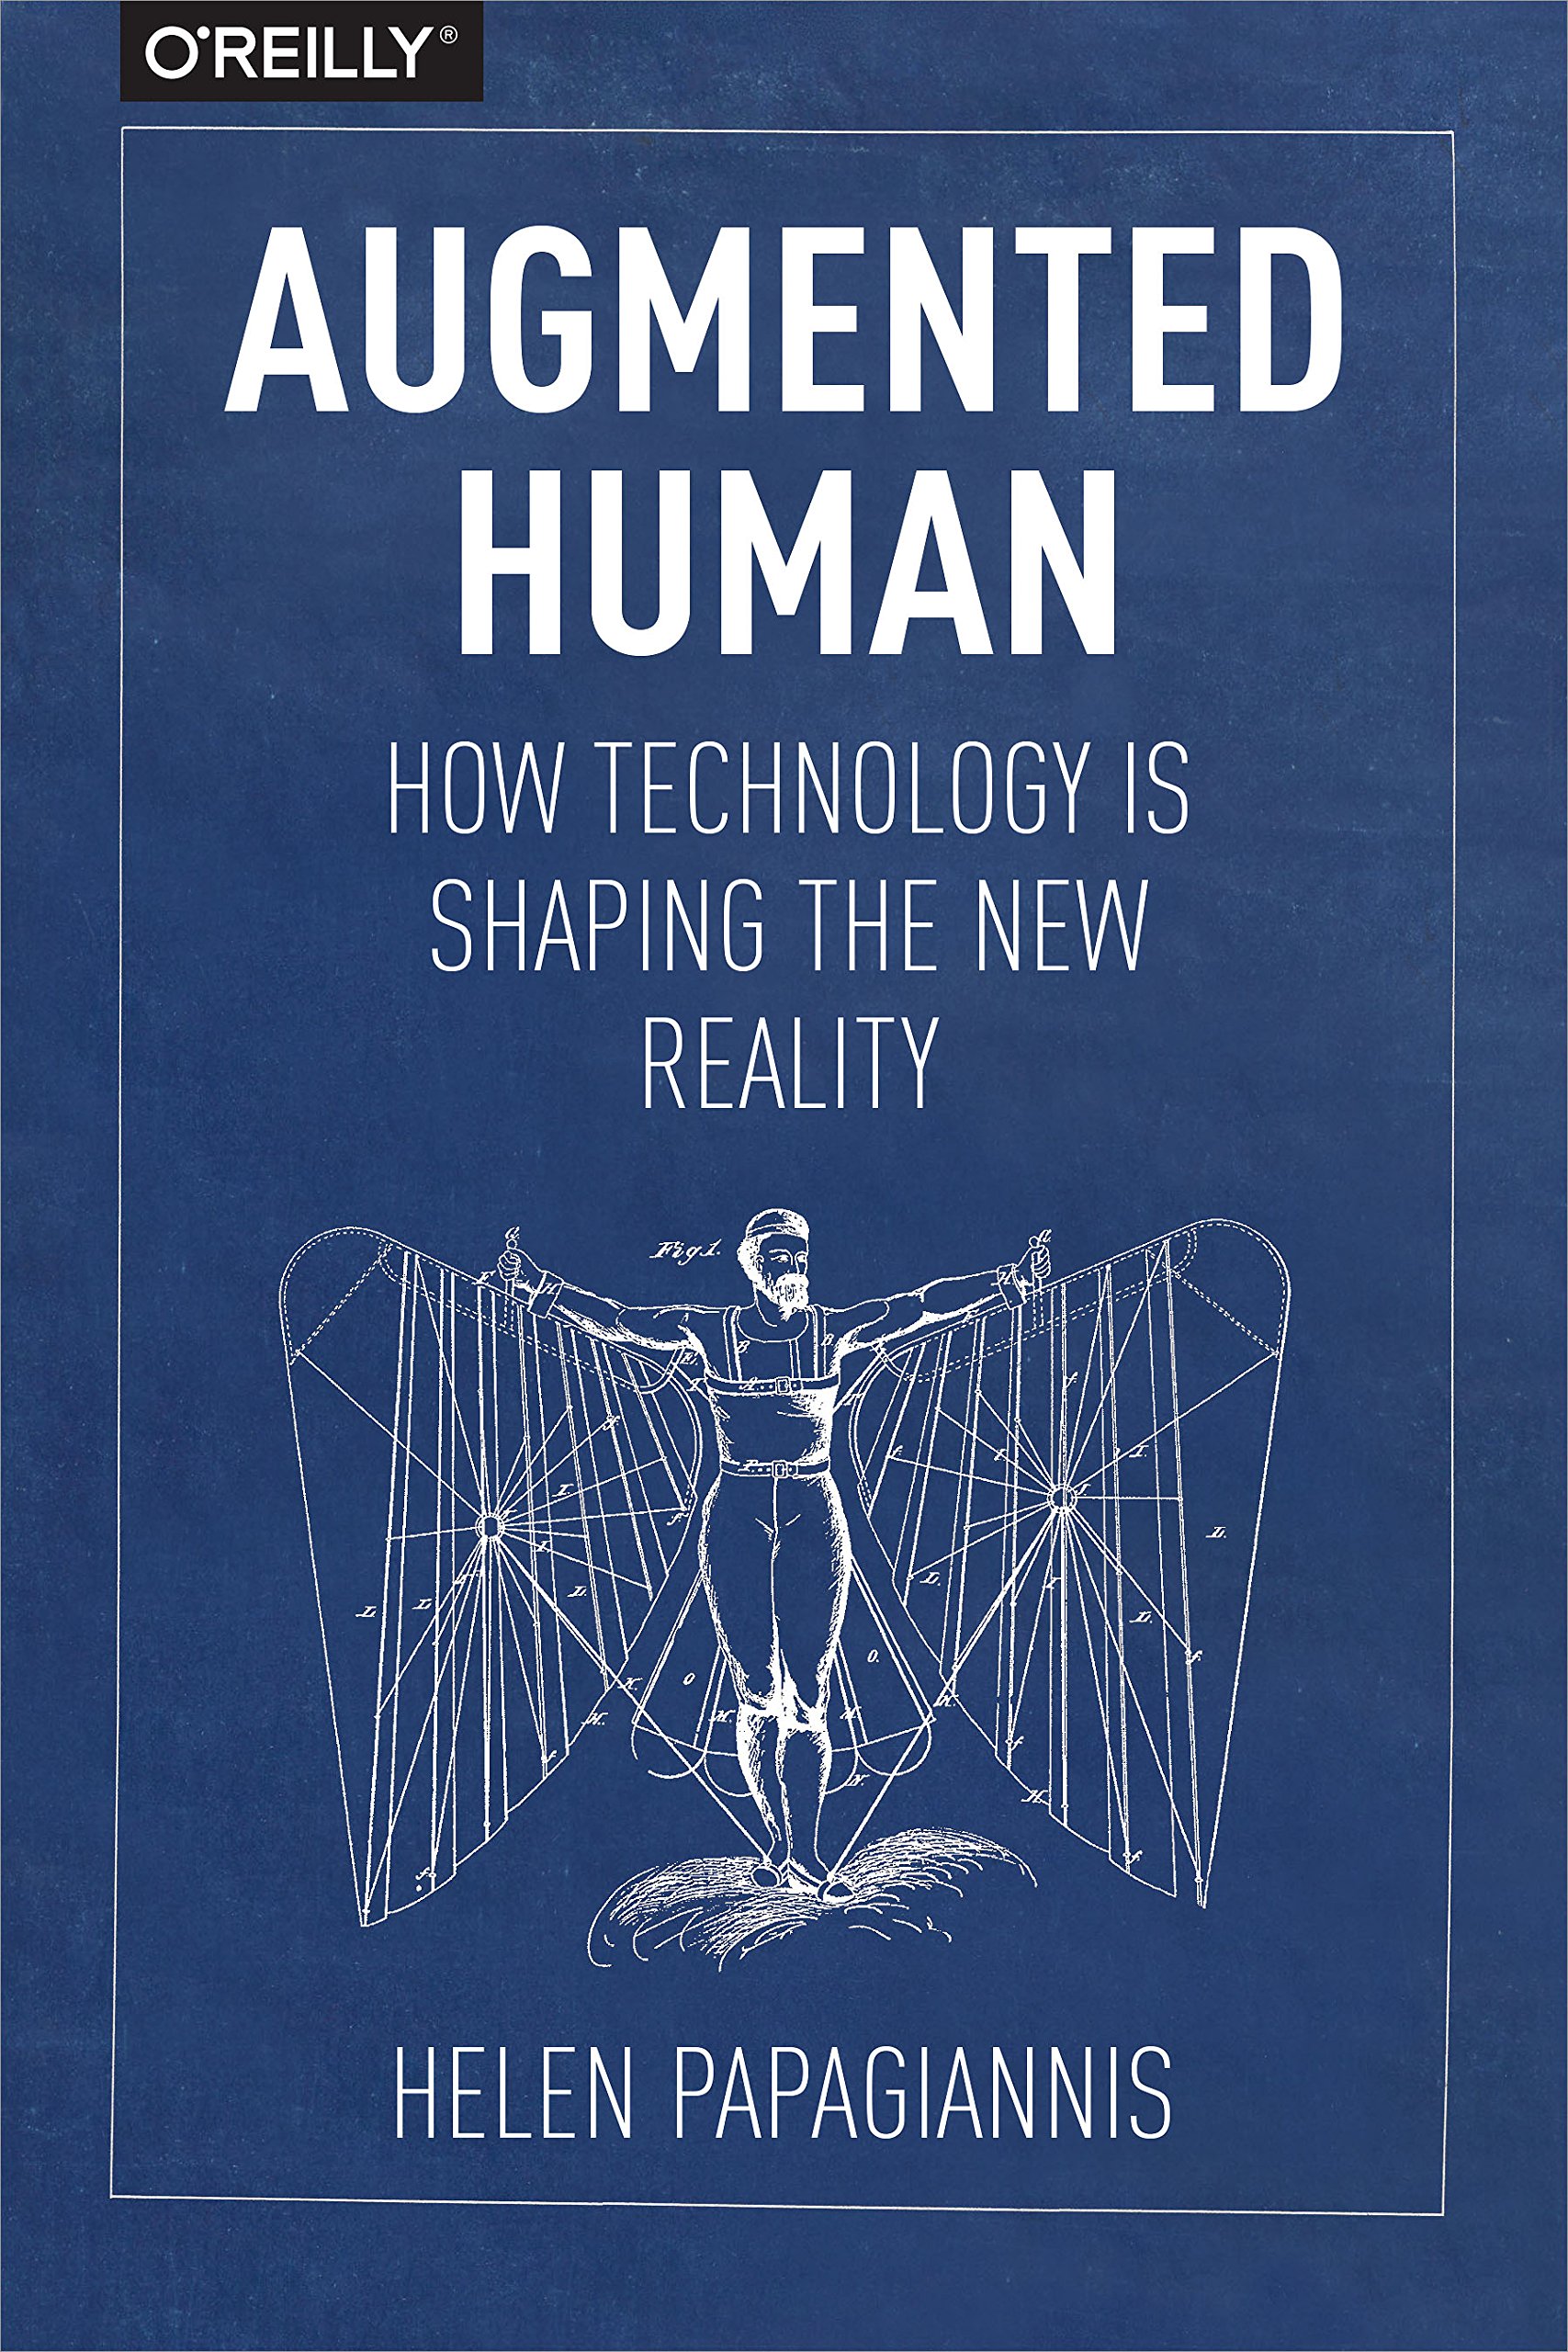 https://www.amazon.com/Augmented-Human-Technology-Shaping-Reality/dp/1491928328